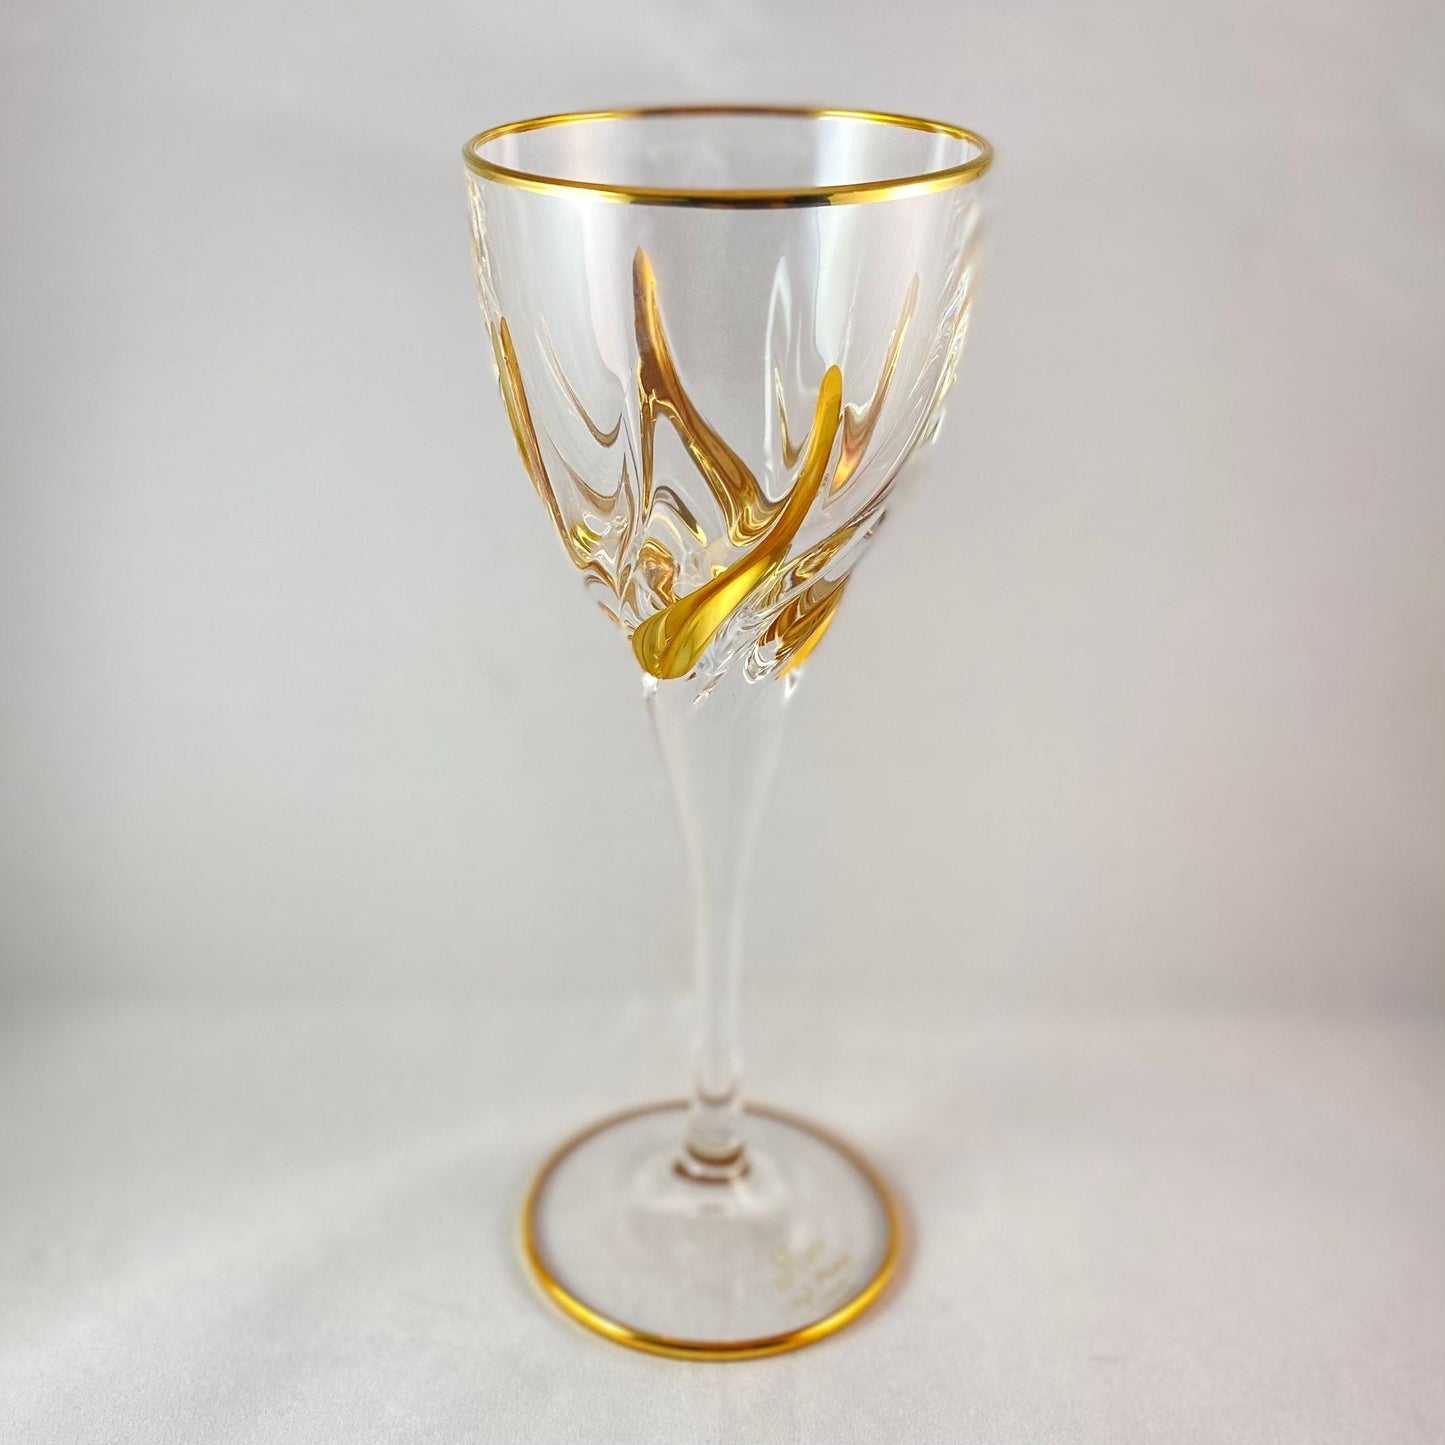 24kt Gold Stem Venetian Glass Wine Glass - Handmade in Italy, Colorful Murano Glass